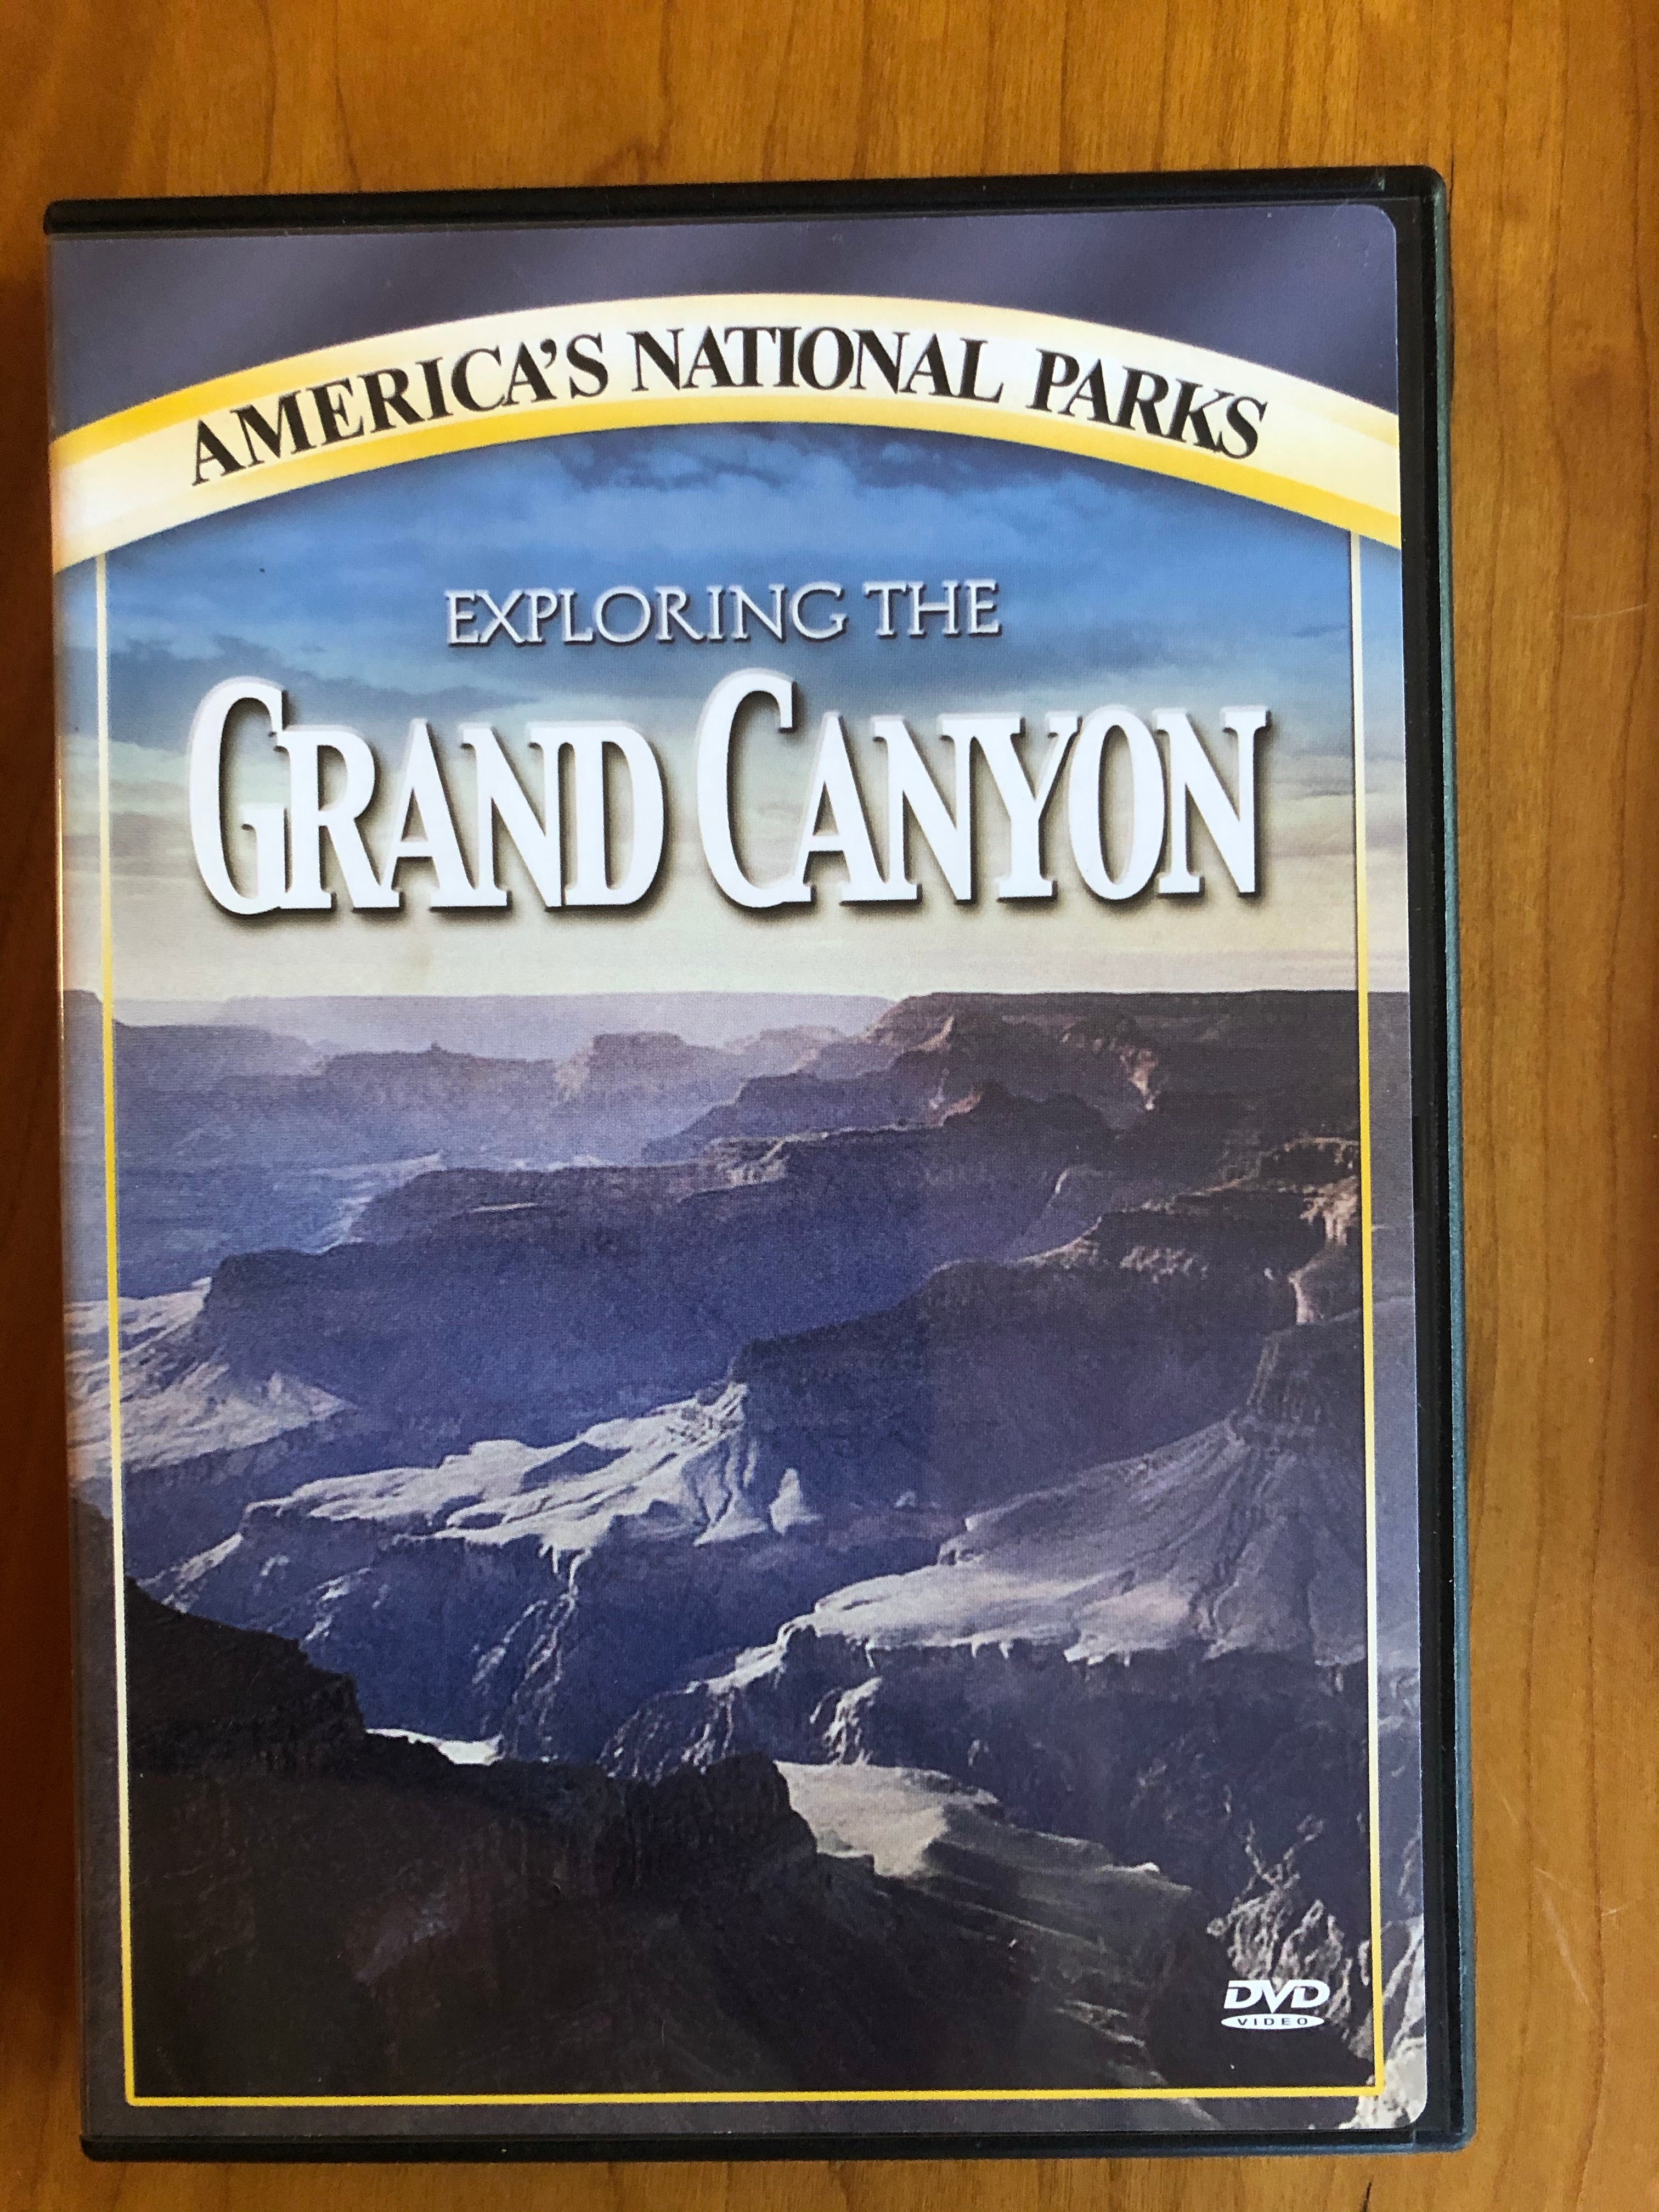 Kenny Rogers Discovering national parks DVDs